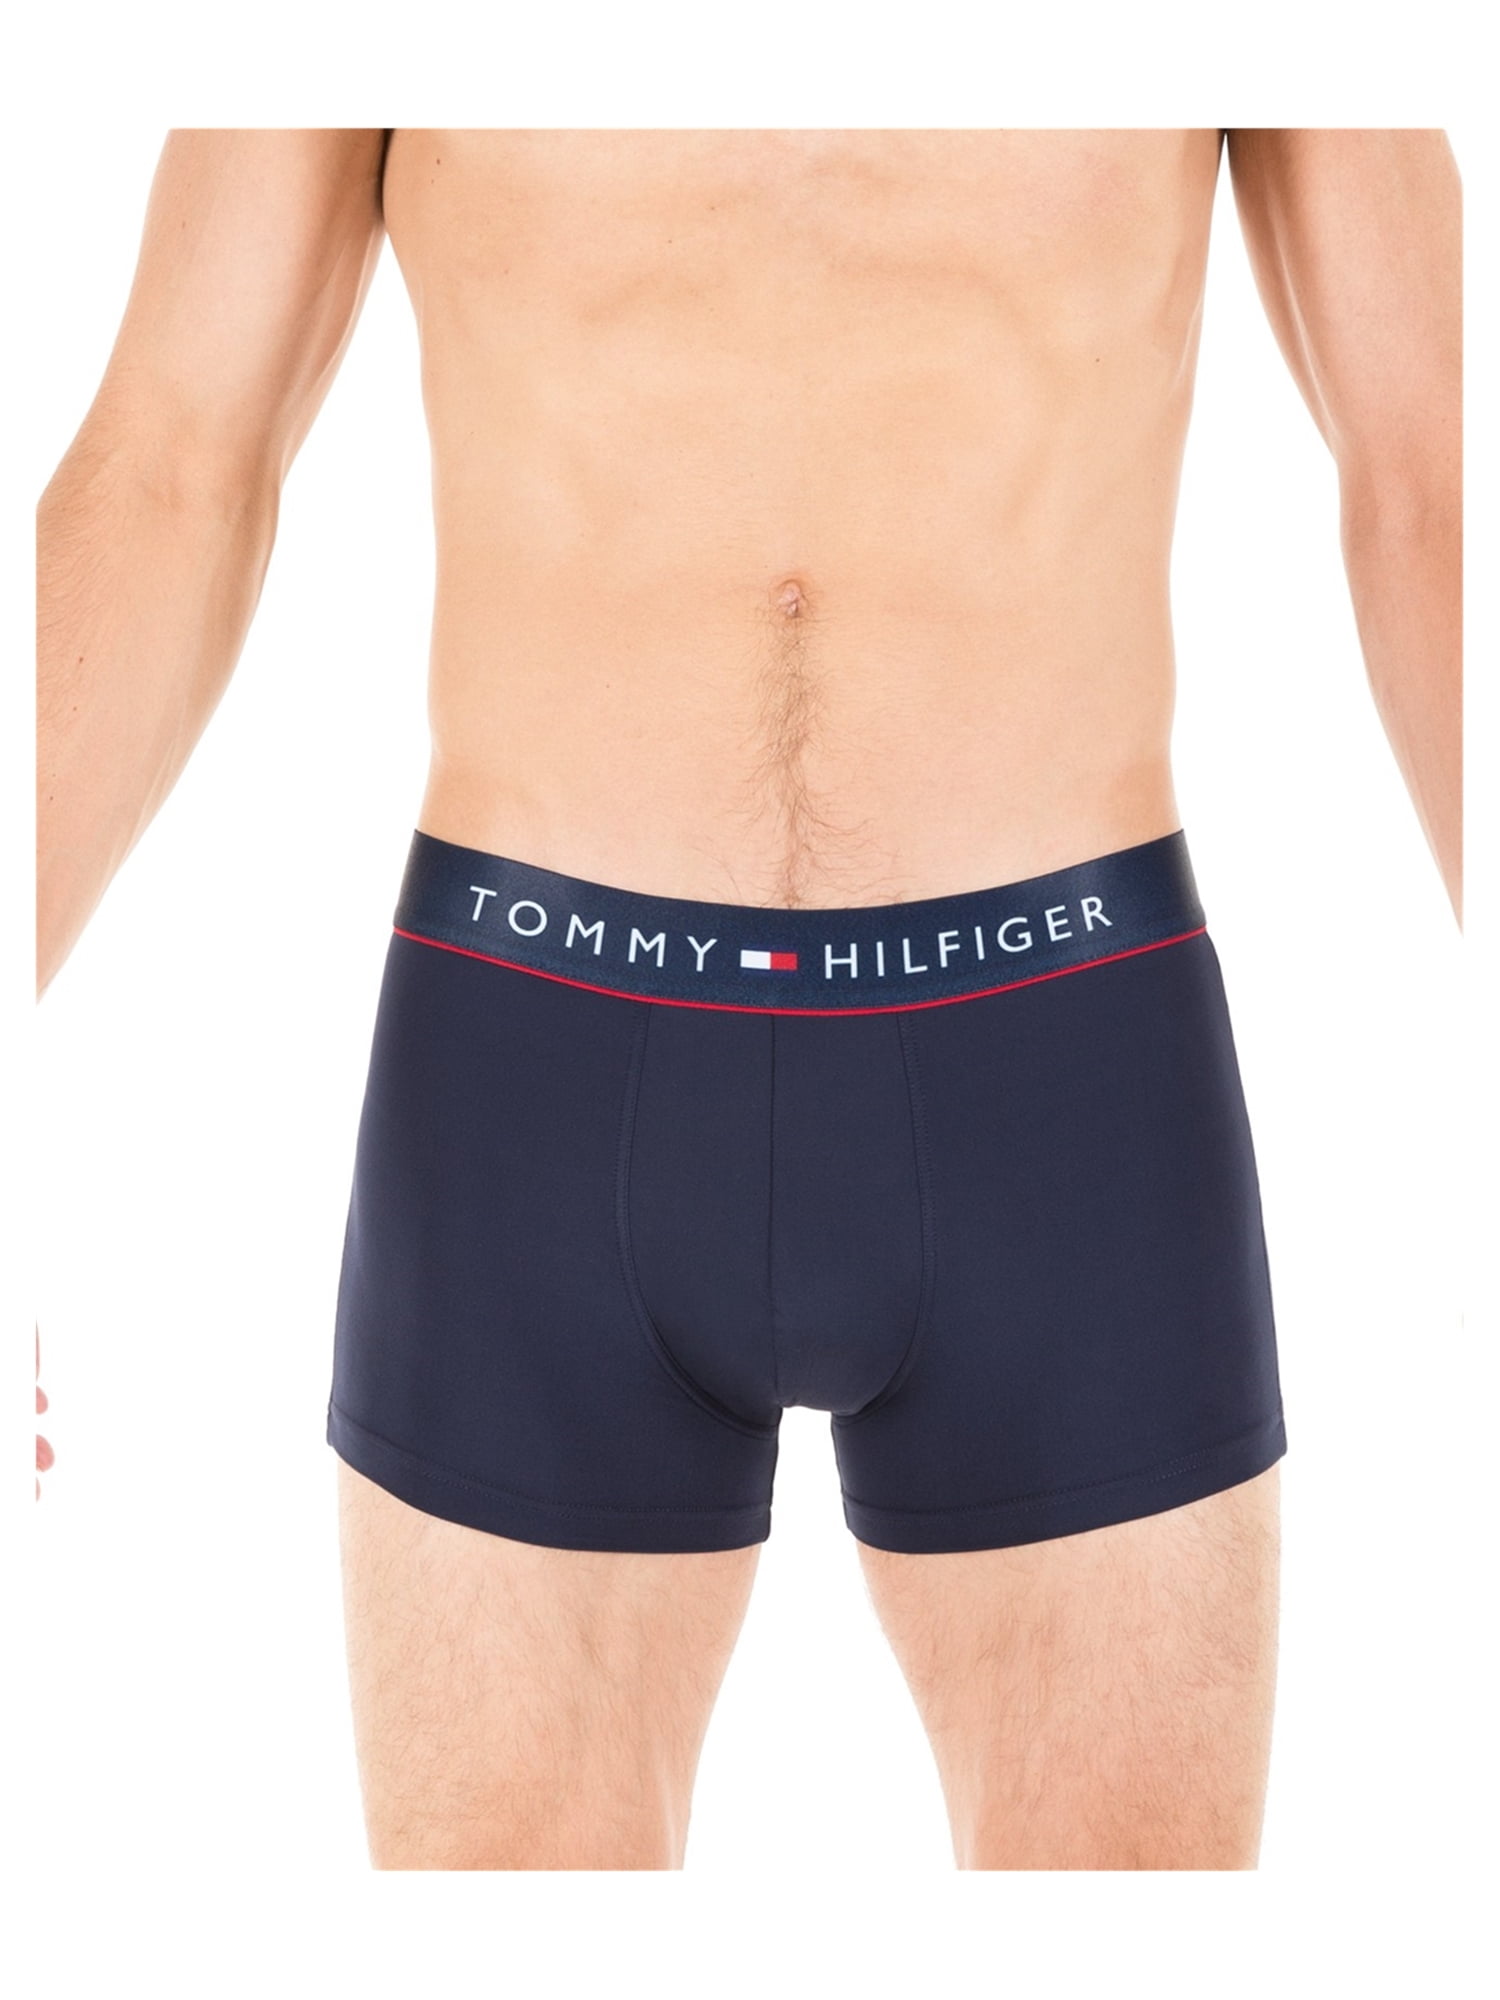 Tommy Hilfiger Micro Flex Trunks Underwear 09T2772 Mens Size XL New 